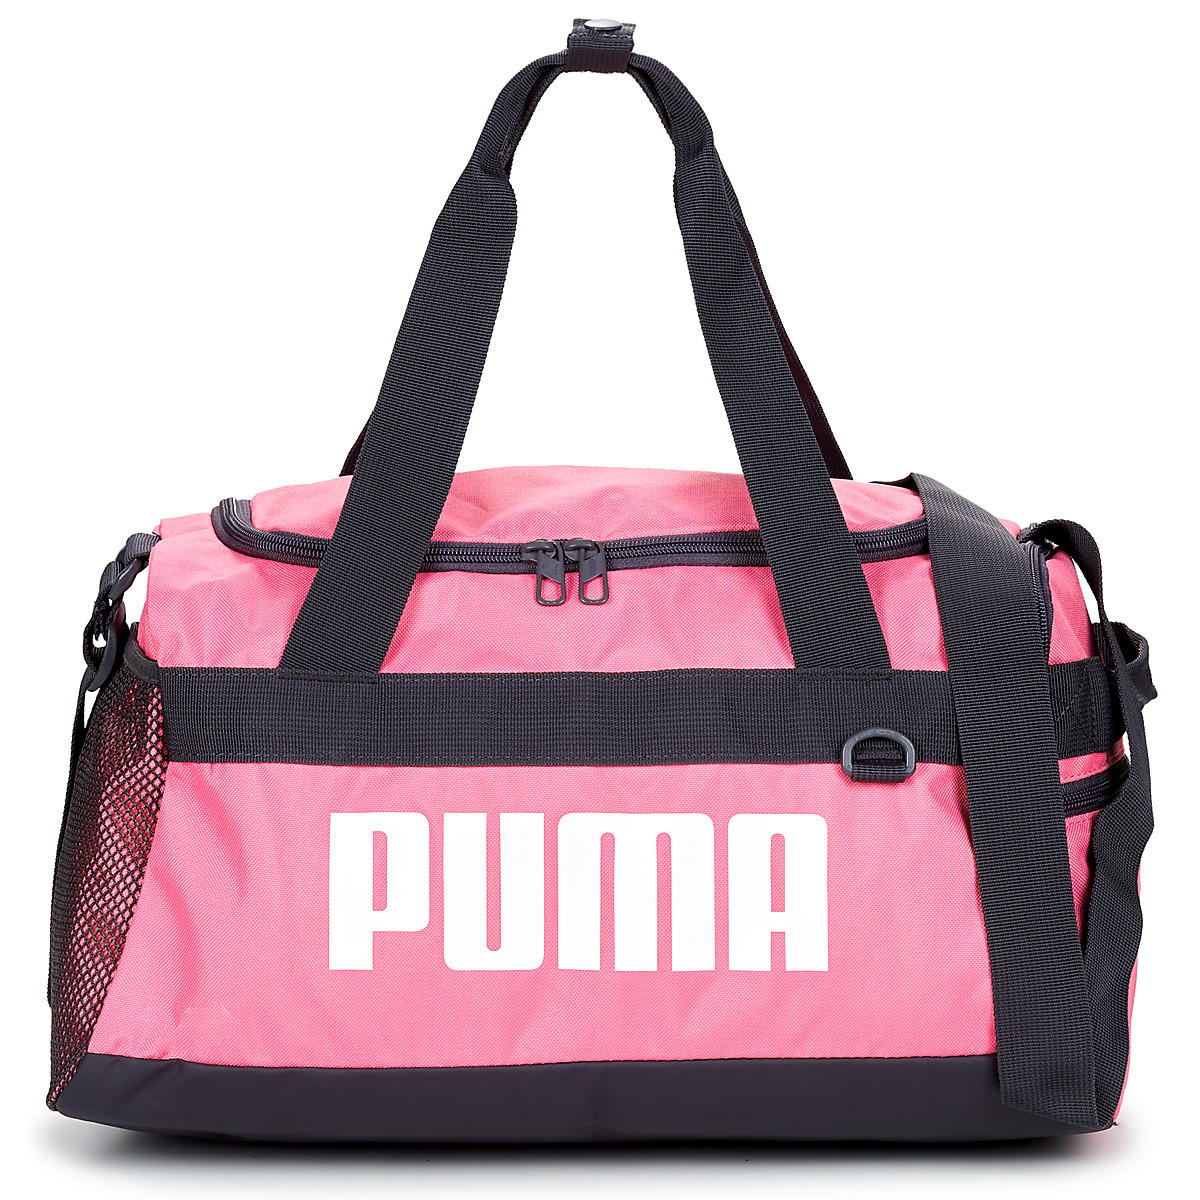 Puma Rose PUMA CHALLENGER DUFFEL BAG XS bXxNi6O5